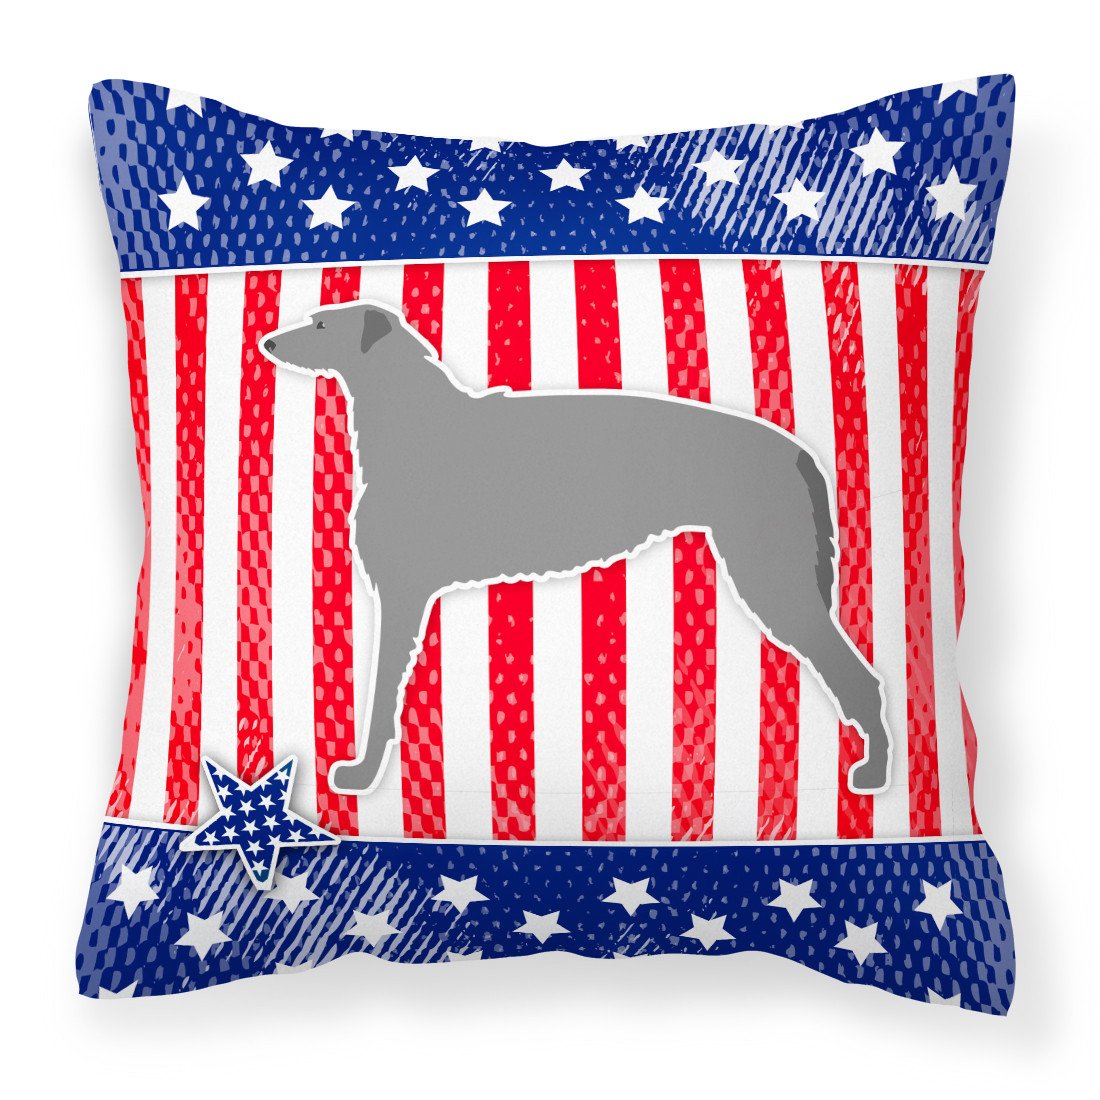 USA Patriotic Scottish Deerhound Fabric Decorative Pillow BB3296PW1818 by Caroline's Treasures